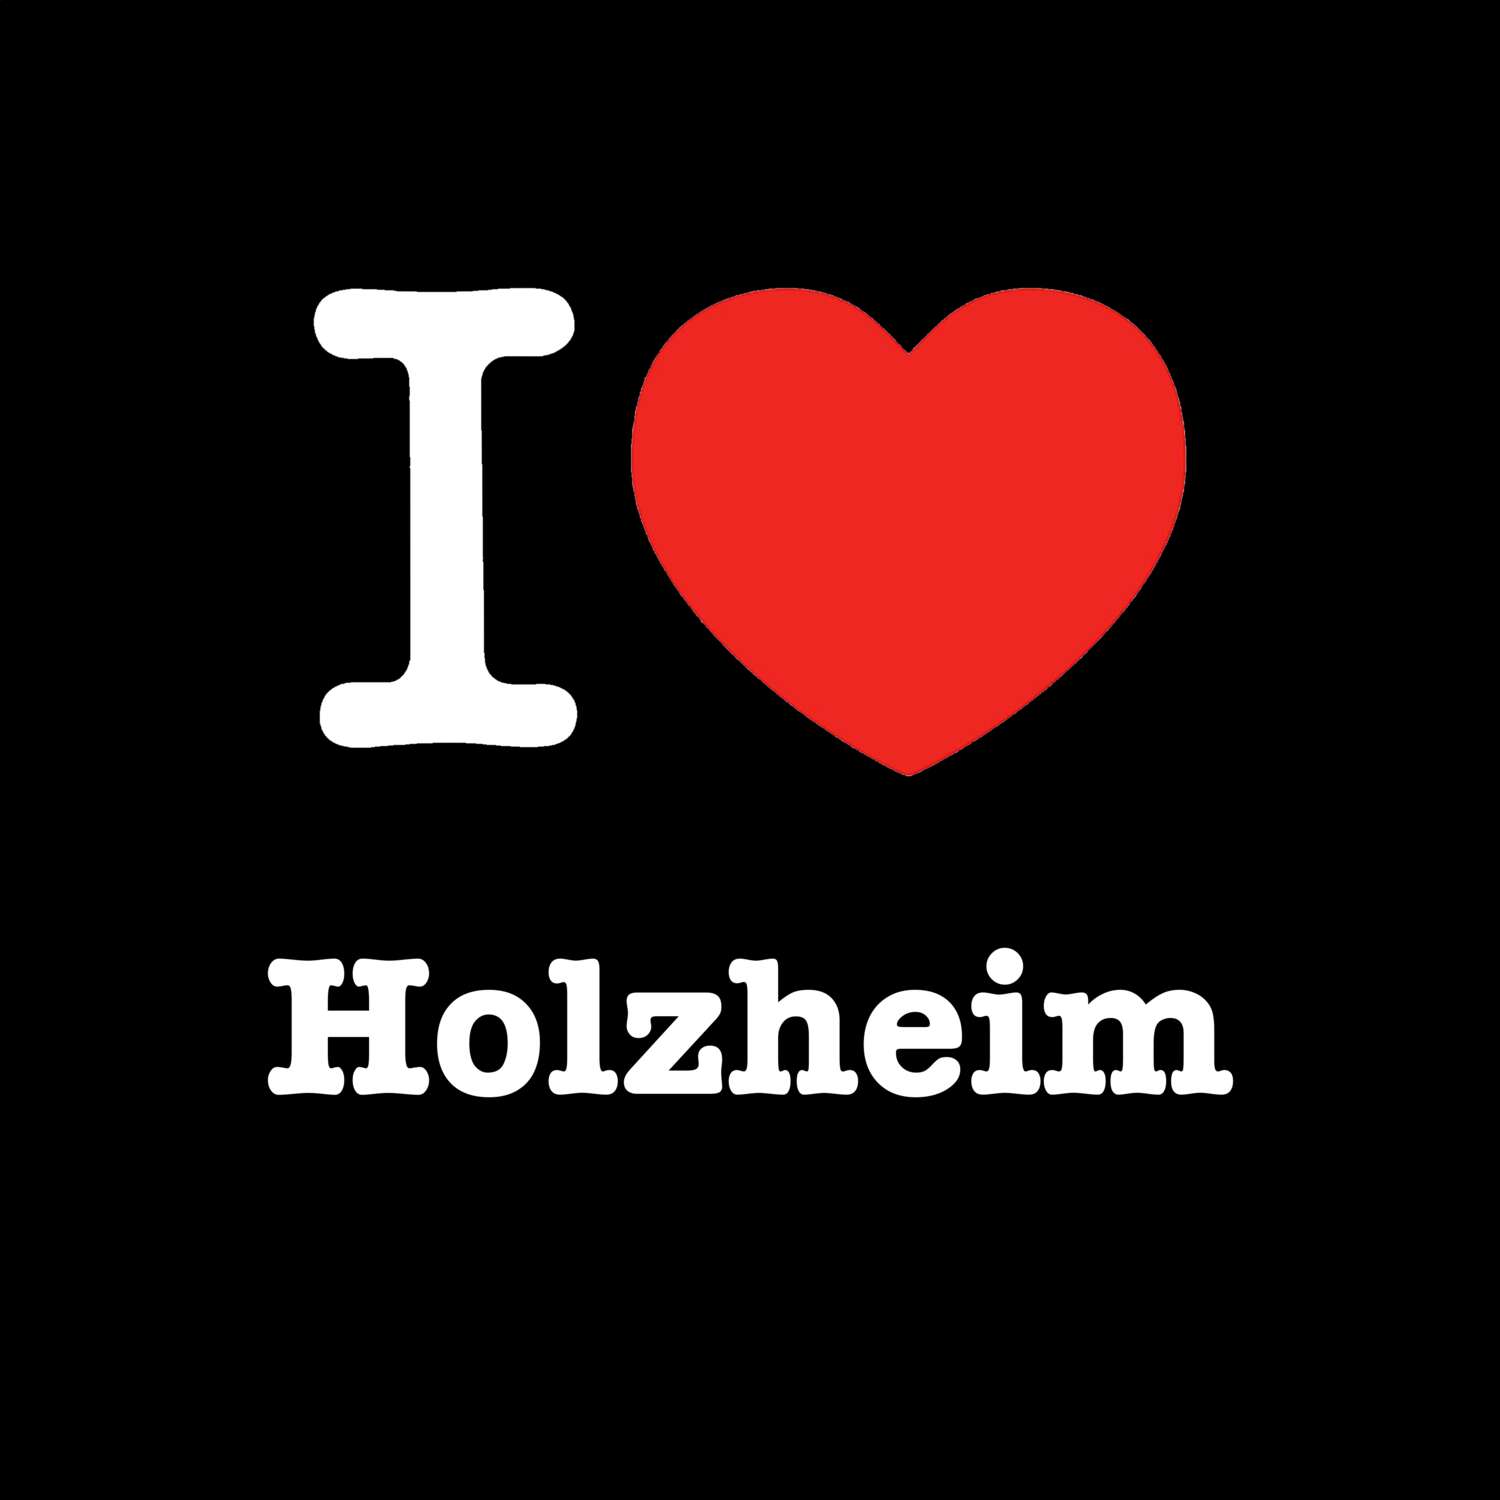 Holzheim T-Shirt »I love«